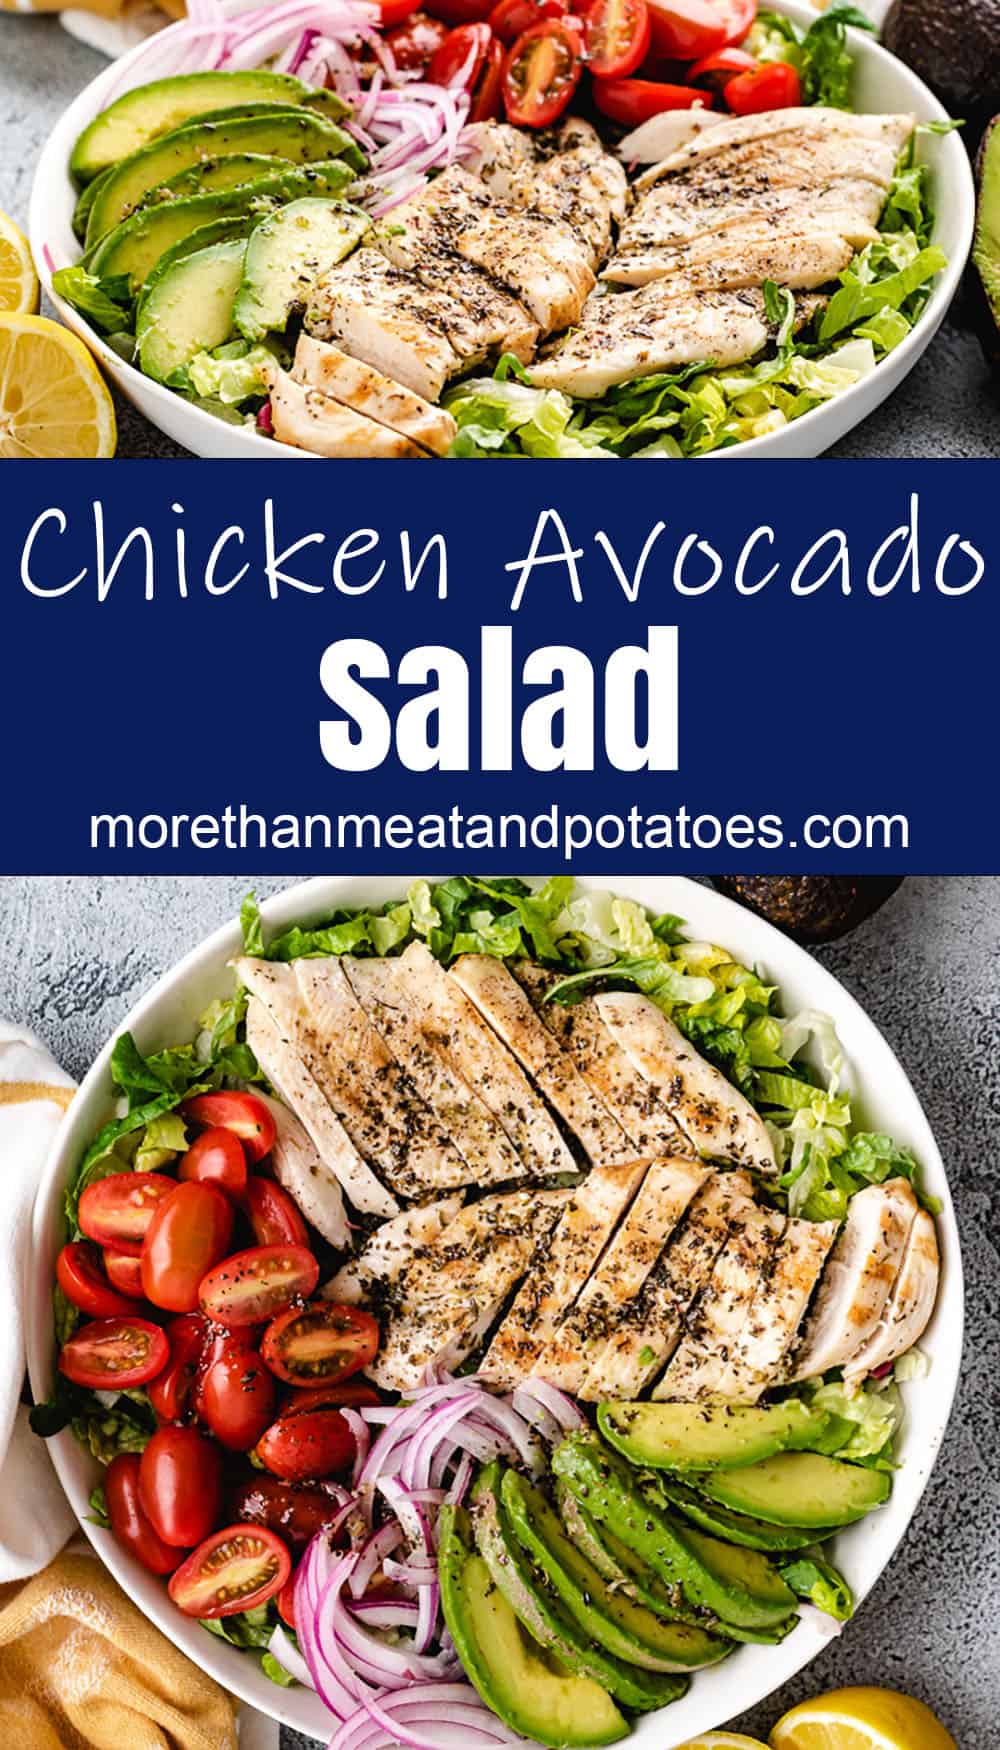 Grilled Chicken Avocado Salad